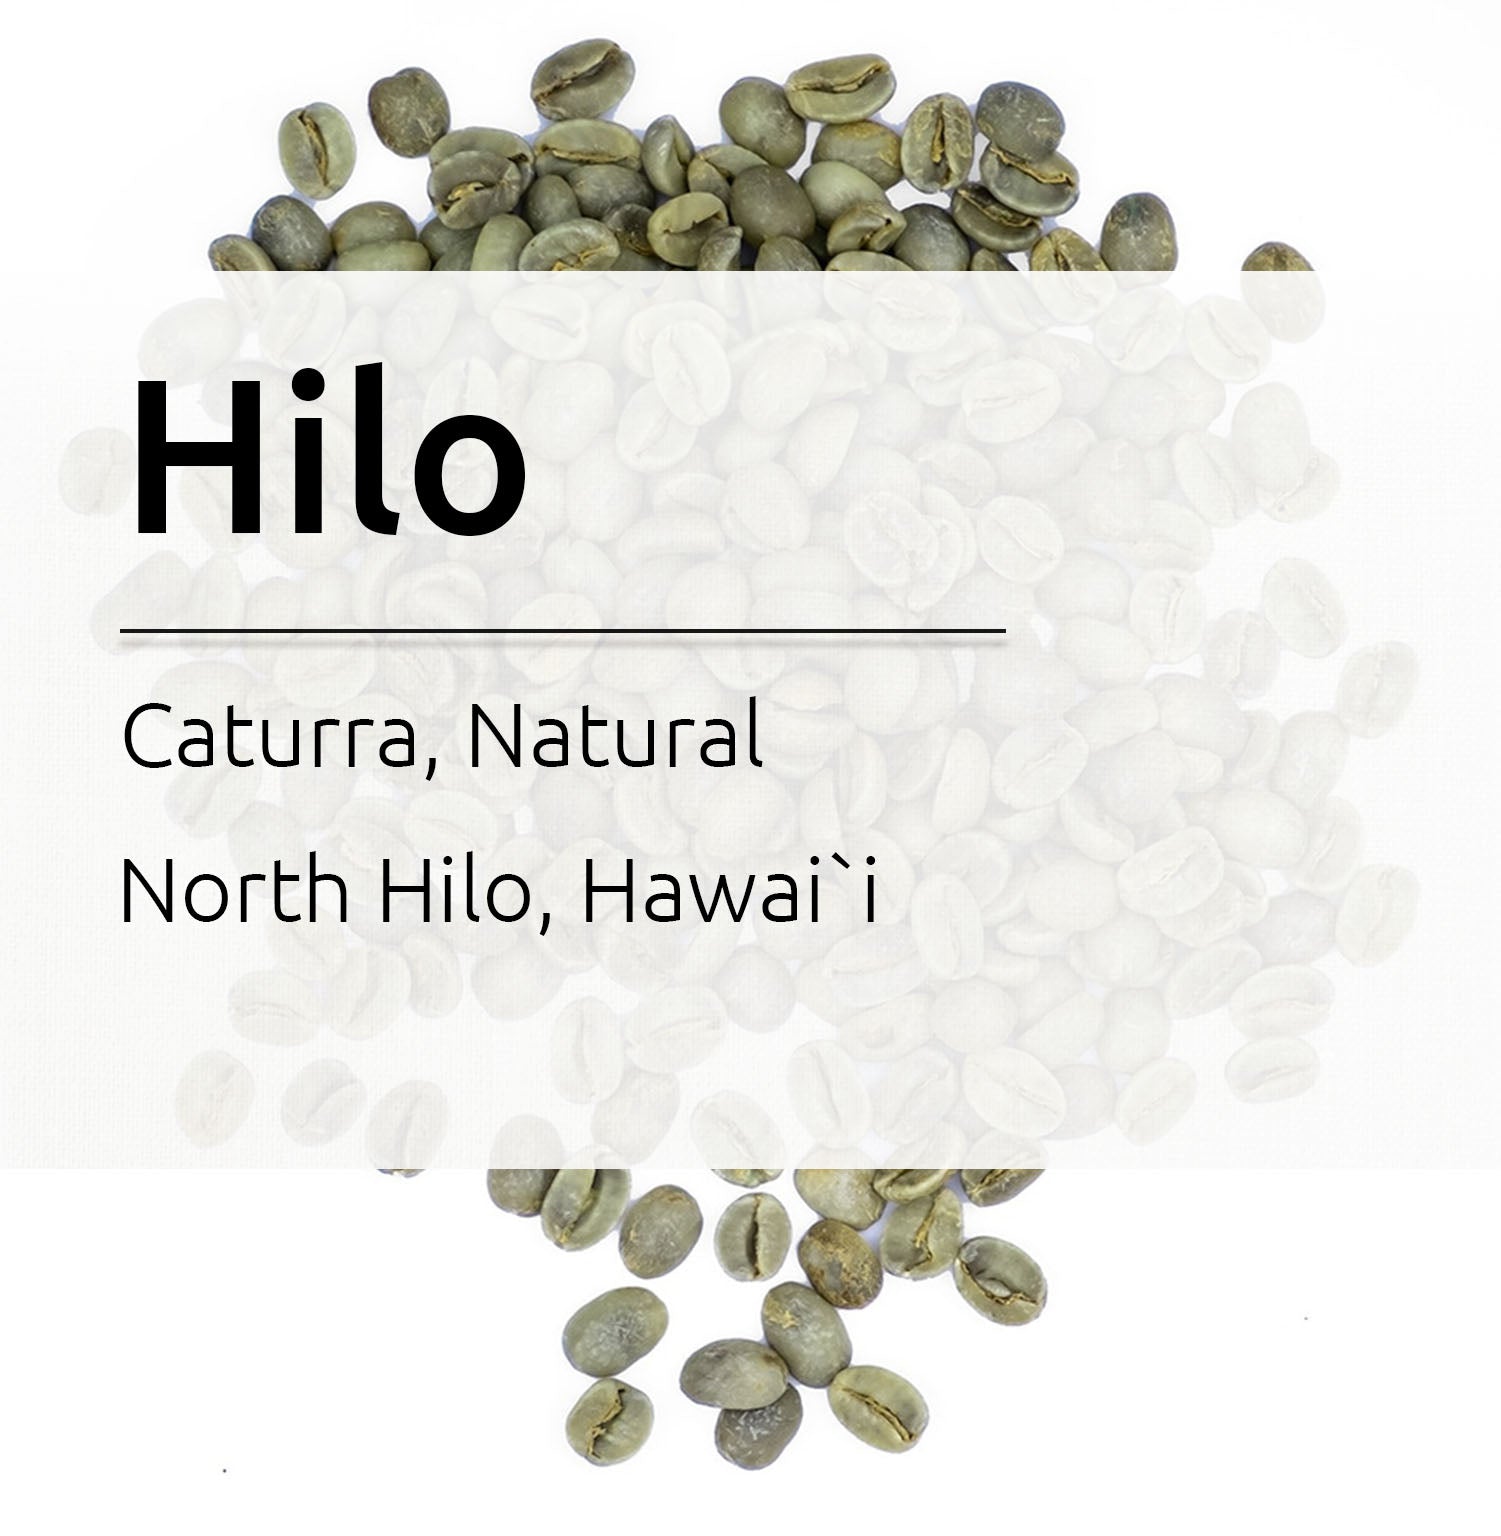 Caturra, Hilo Waterfalls, Green beans, Hilo